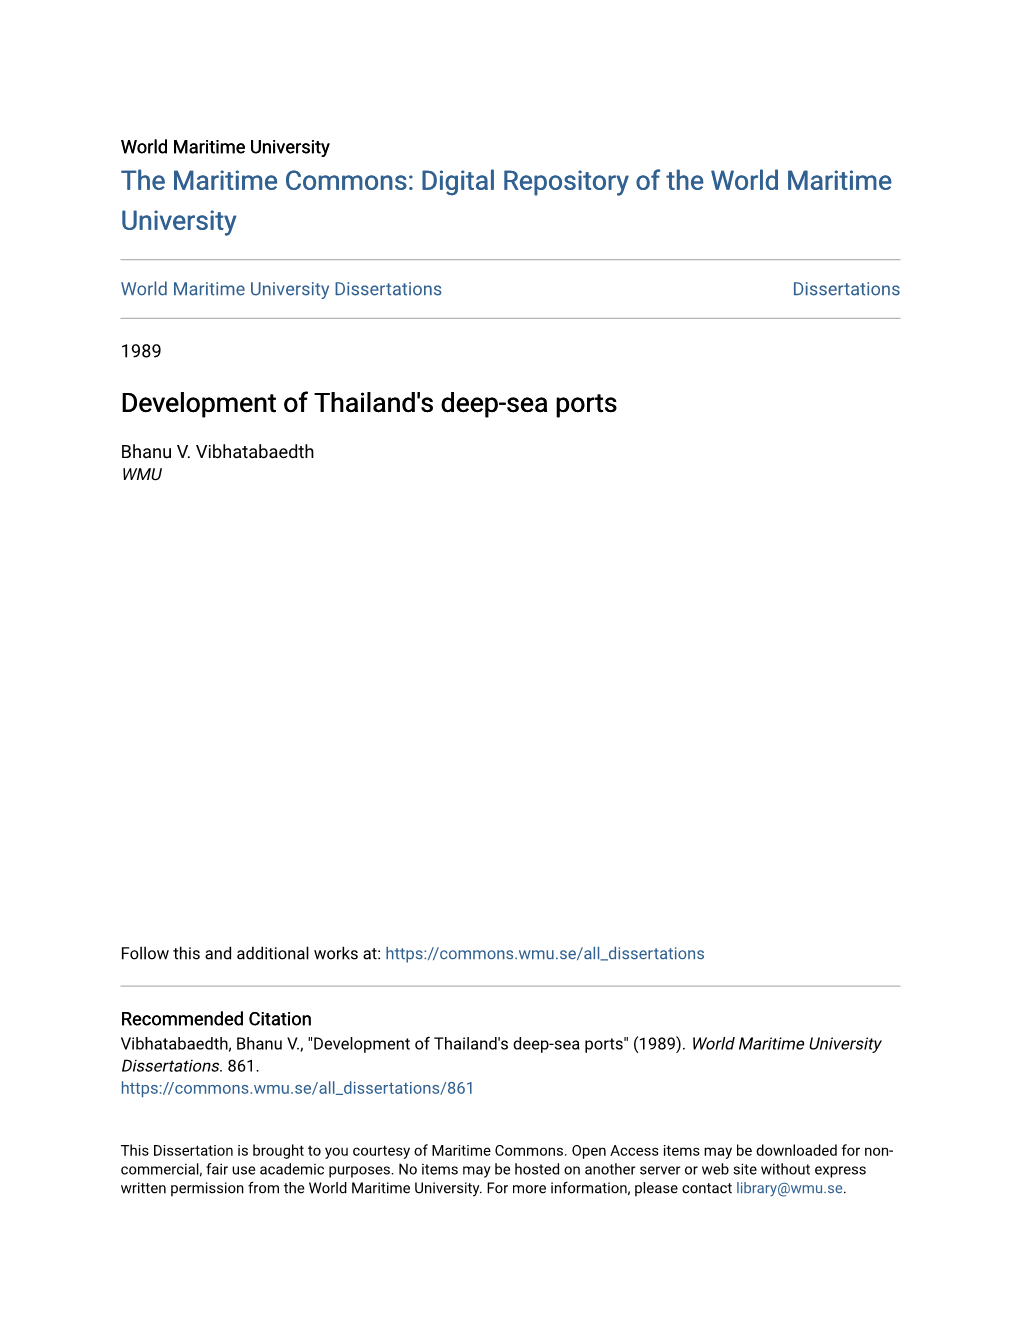 Development of Thailand's Deep-Sea Ports